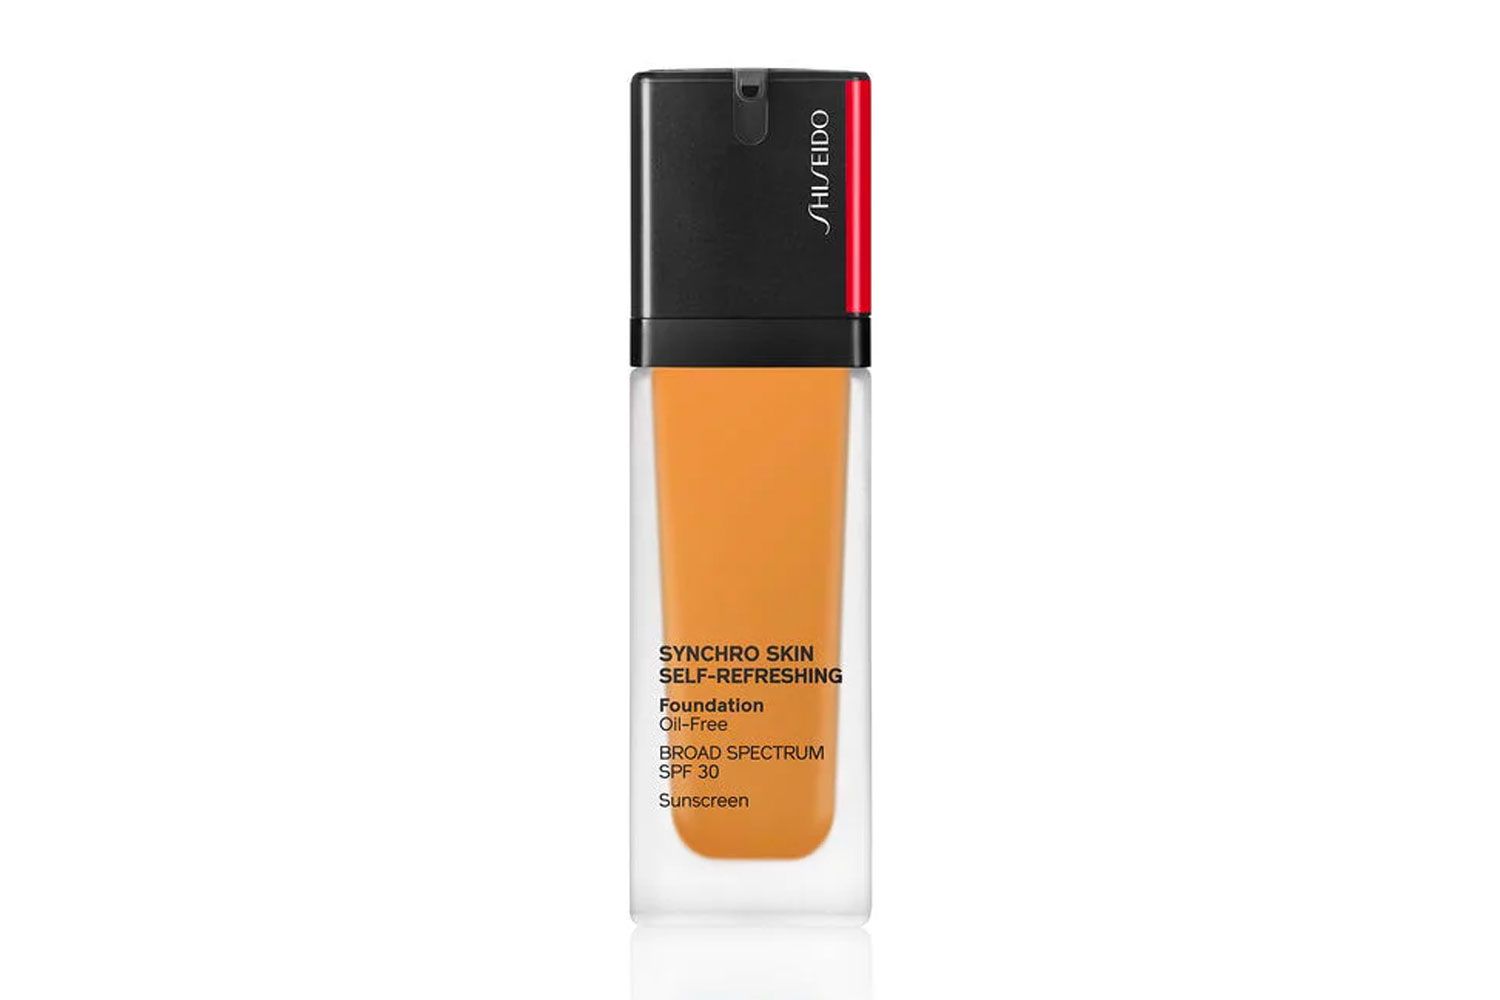 Shiseido Synchro Skin Self-Refreshing Foundation